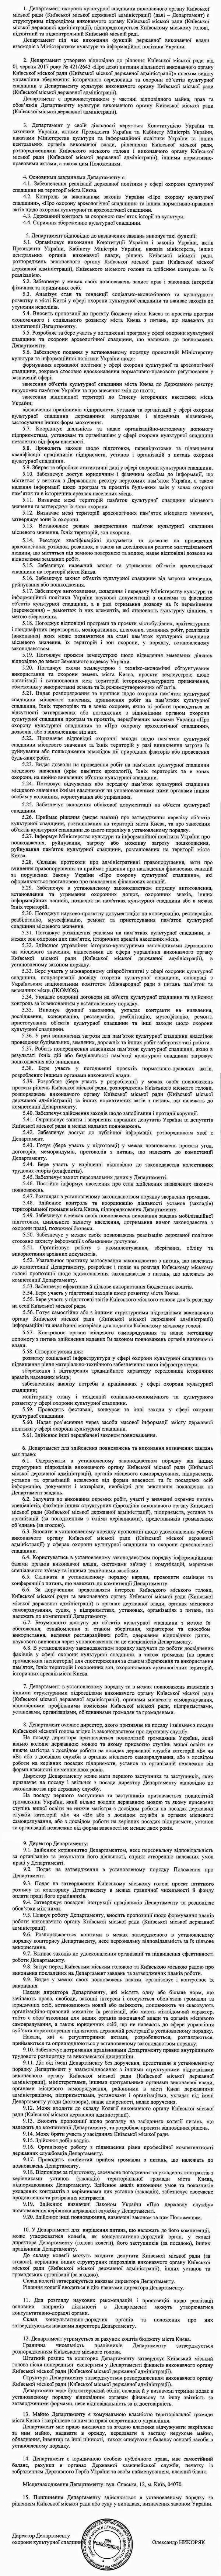 КМДА - Деп охор пам - Полож 2020-05-29